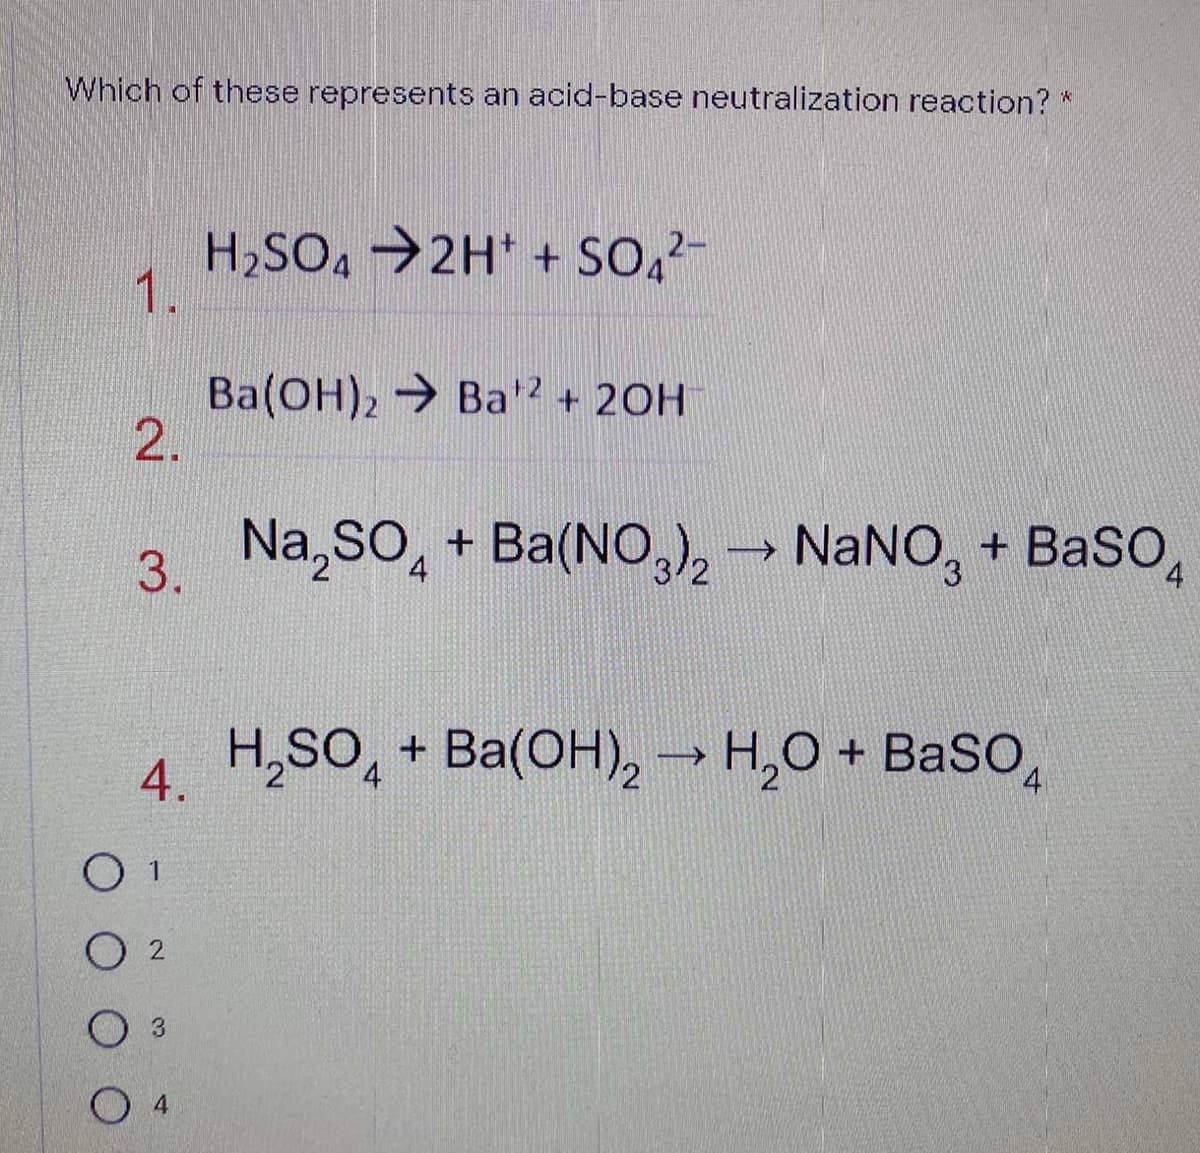 Which of these represents an acid-base neutralization reaction? *
H2SO4 →2H* + SO,-
1.
Ba(OH), Ba2 + 20H
2.
Na,SO, + Ba(NO,k→ NANO, + BaSo,
3.
4
4.
4 H,SO, + Ba(OH), → H,O + BaSo,
O 1
O 2
O 3
